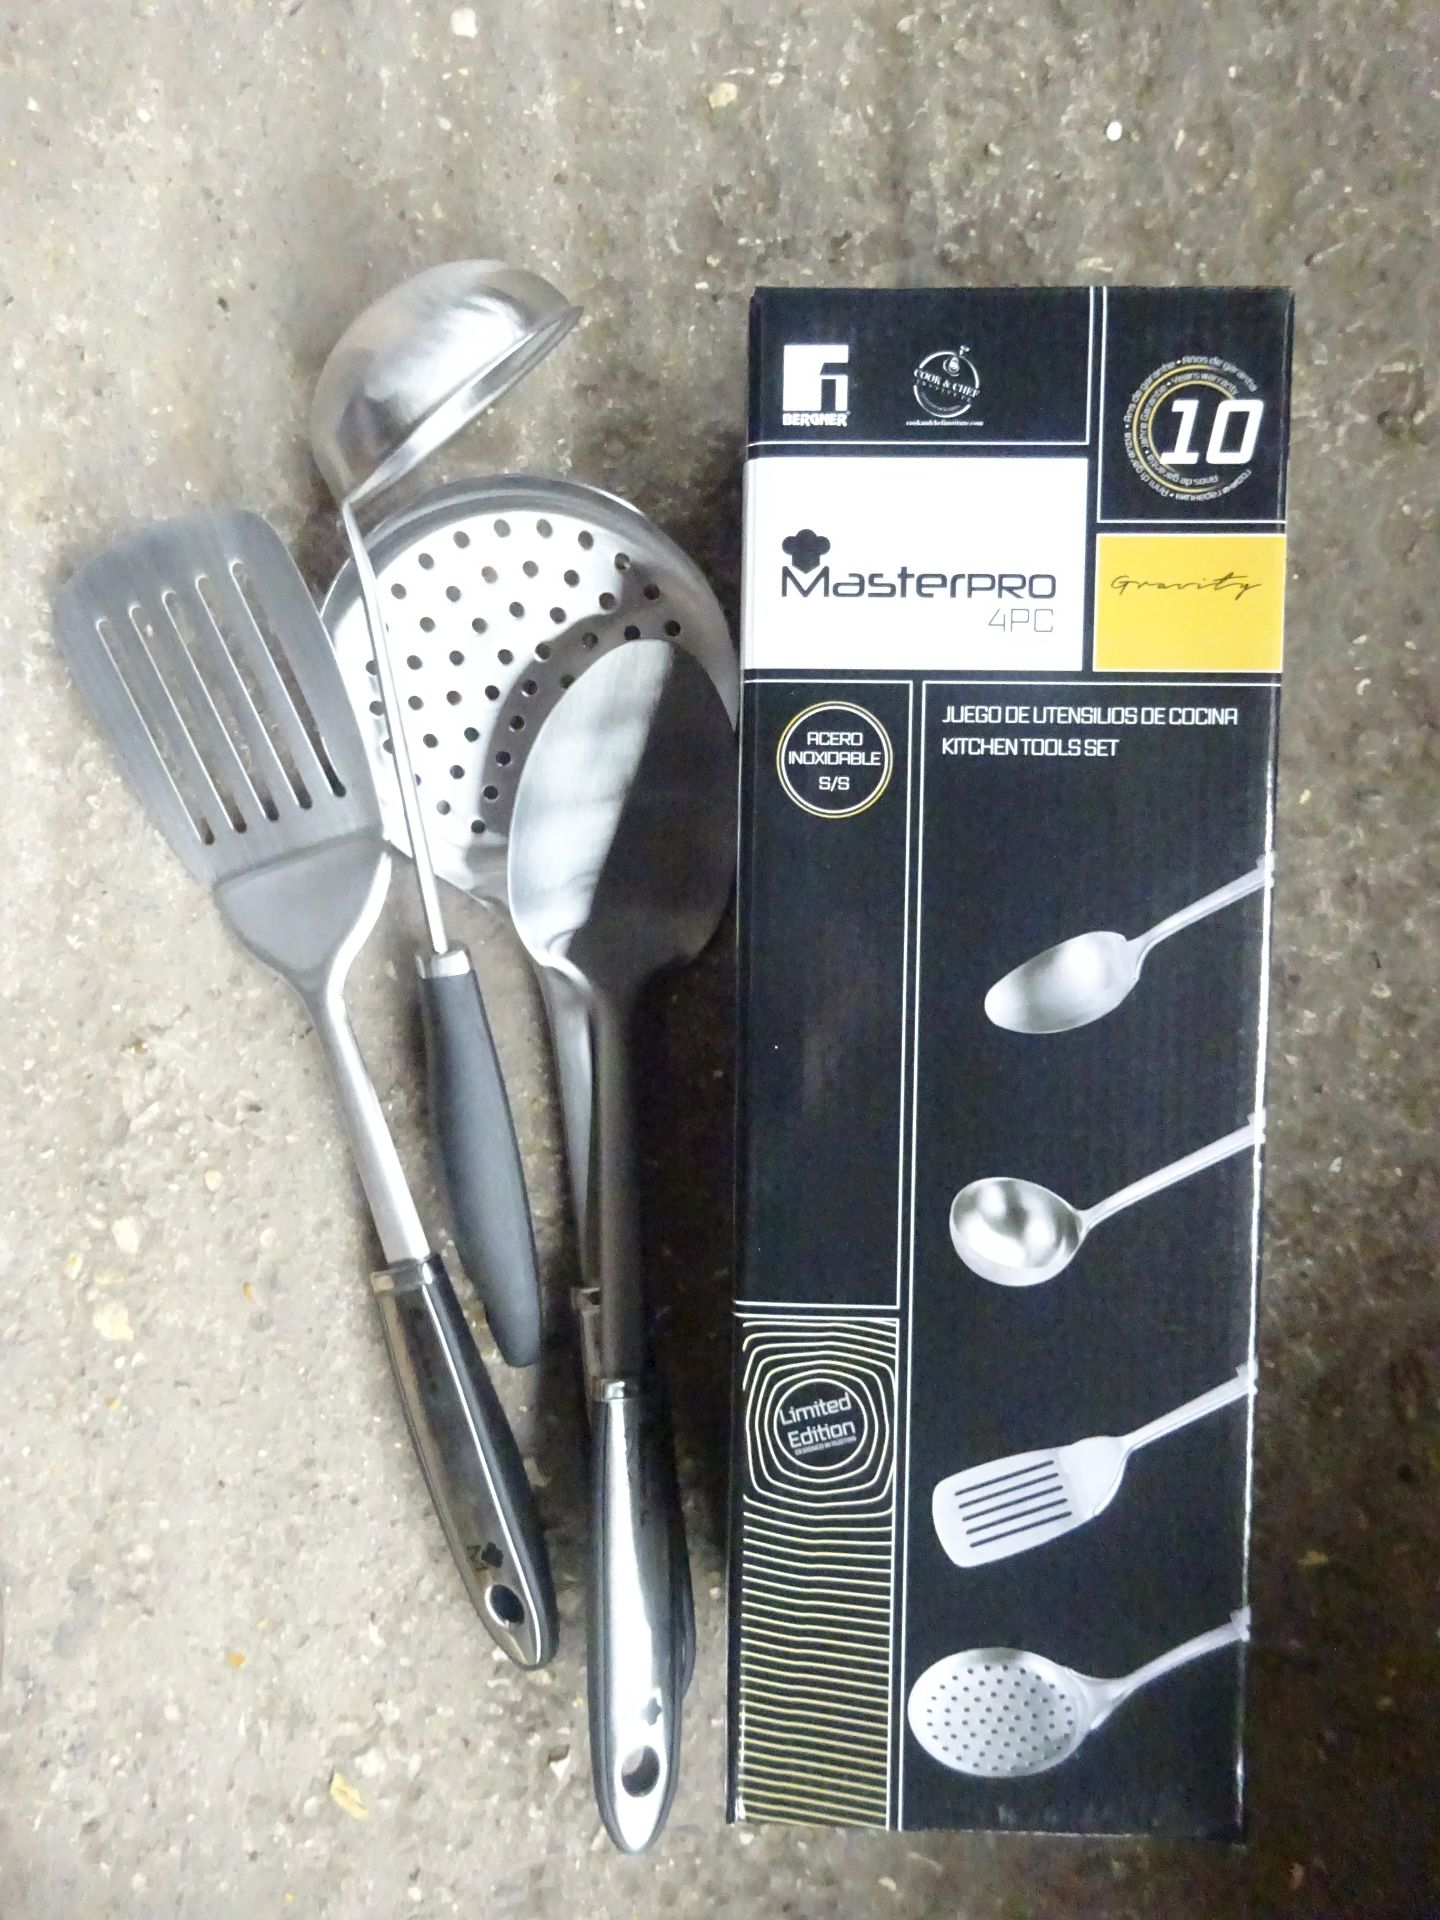 Masterpro 4pc kitchen utensil set